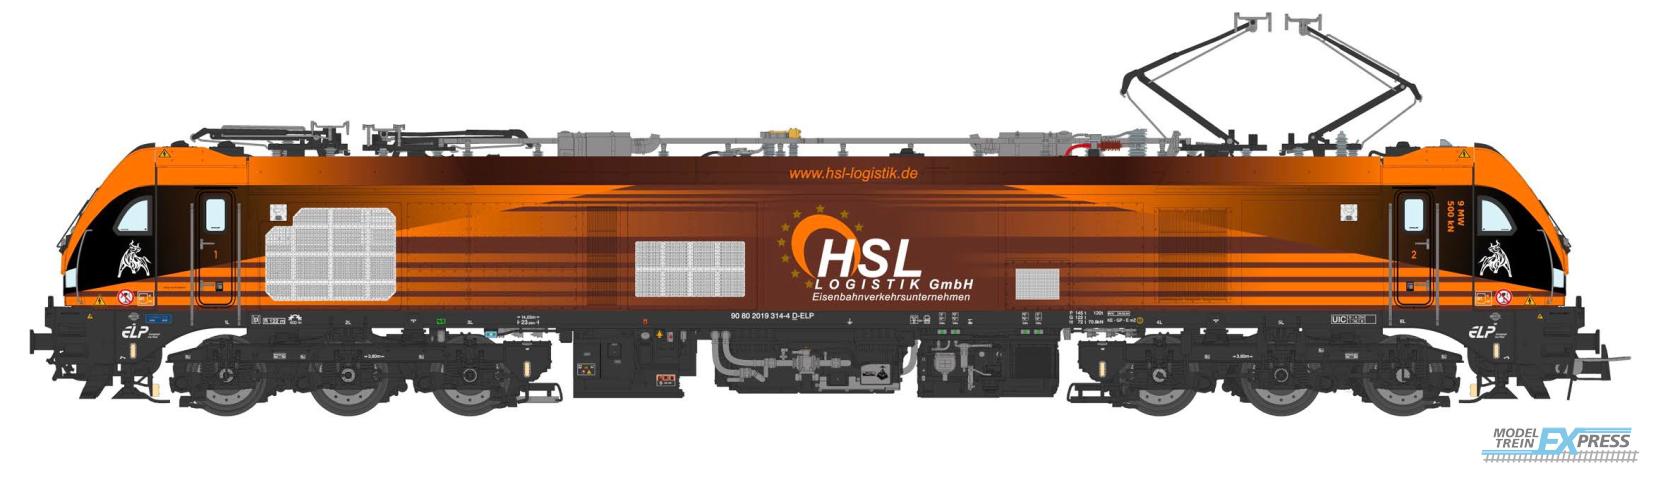 Sudexpress S0193141 Euro 9000 locomotive 2019 314-4 HSL Logistics GmbH, DC Analogic